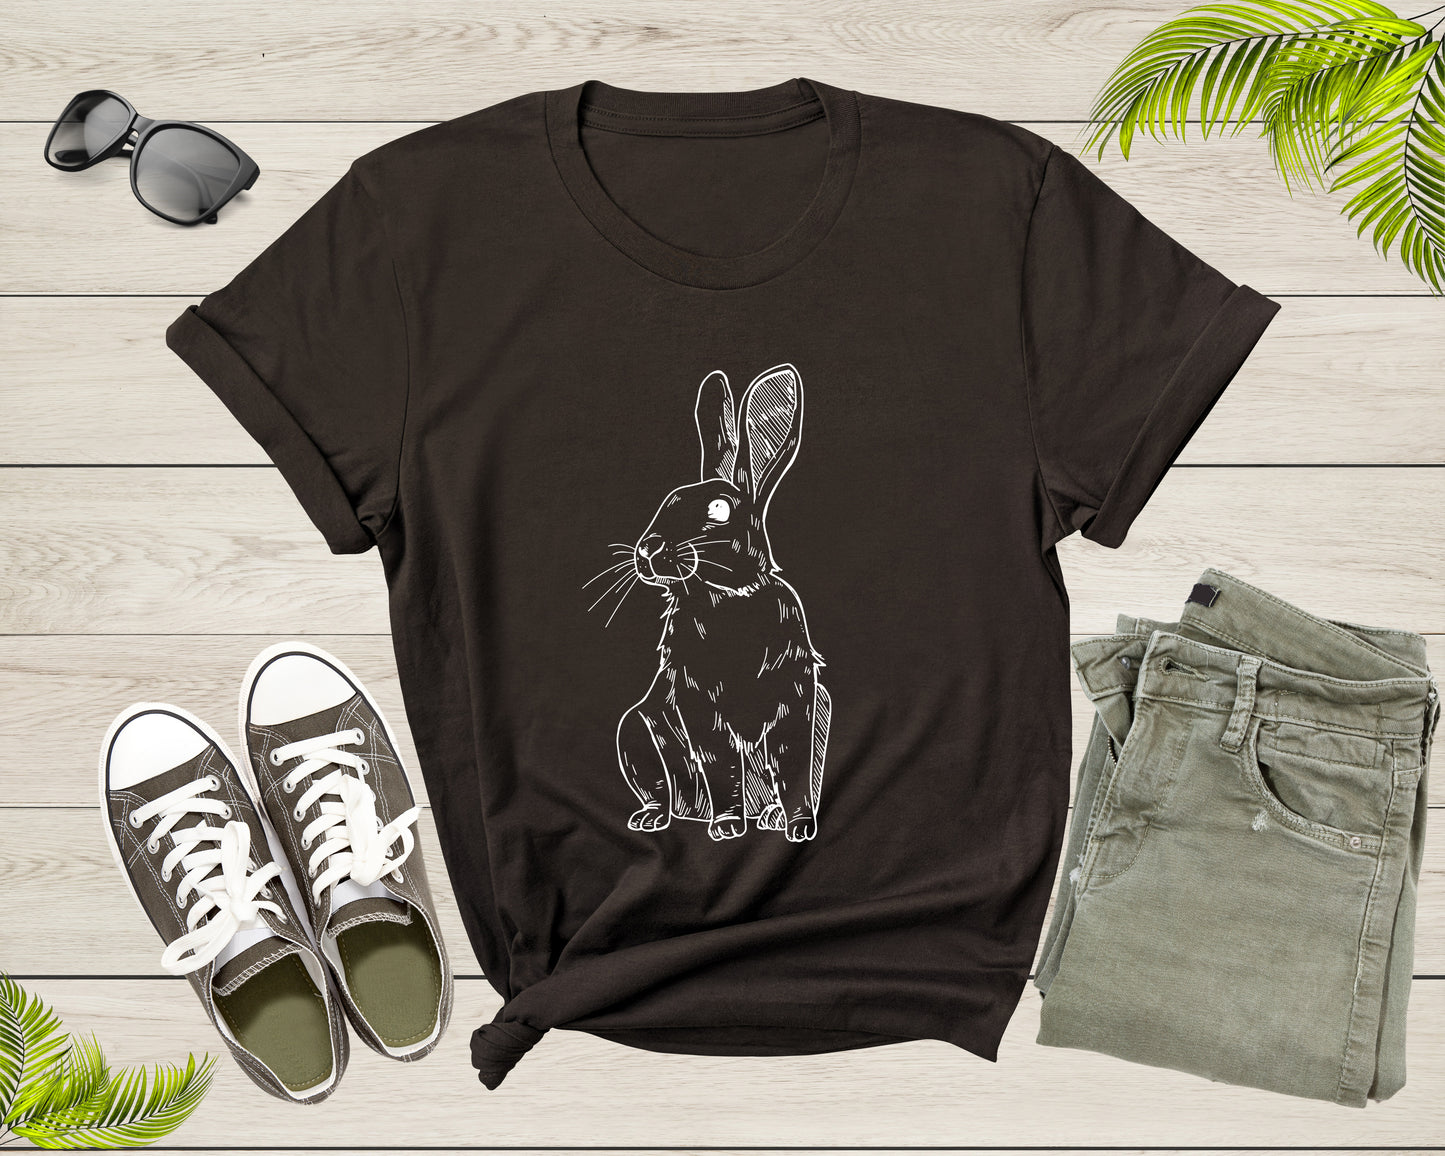 Cute Cuddly Rabbit Pet Animal Hand Dawn Rabbit Silhouette Shirt T-Shirt Bunny Lover Gift T Shirt for Men Women Kids Boys Kids Graphic Tshirt